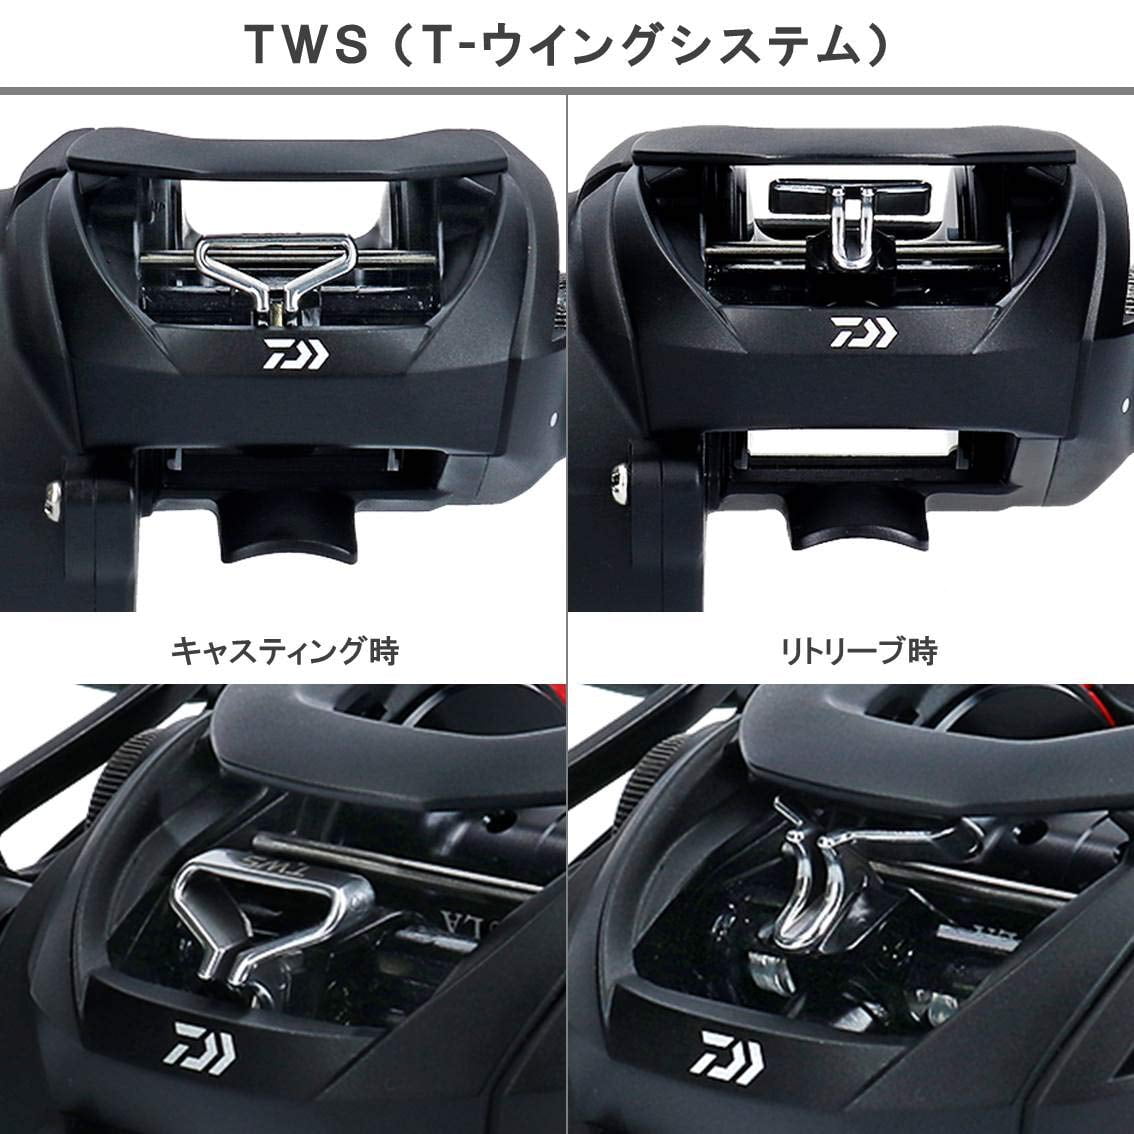 Daiwa (Daiwa) Bait Reel 19 Tatura TW 100H (2019 model)